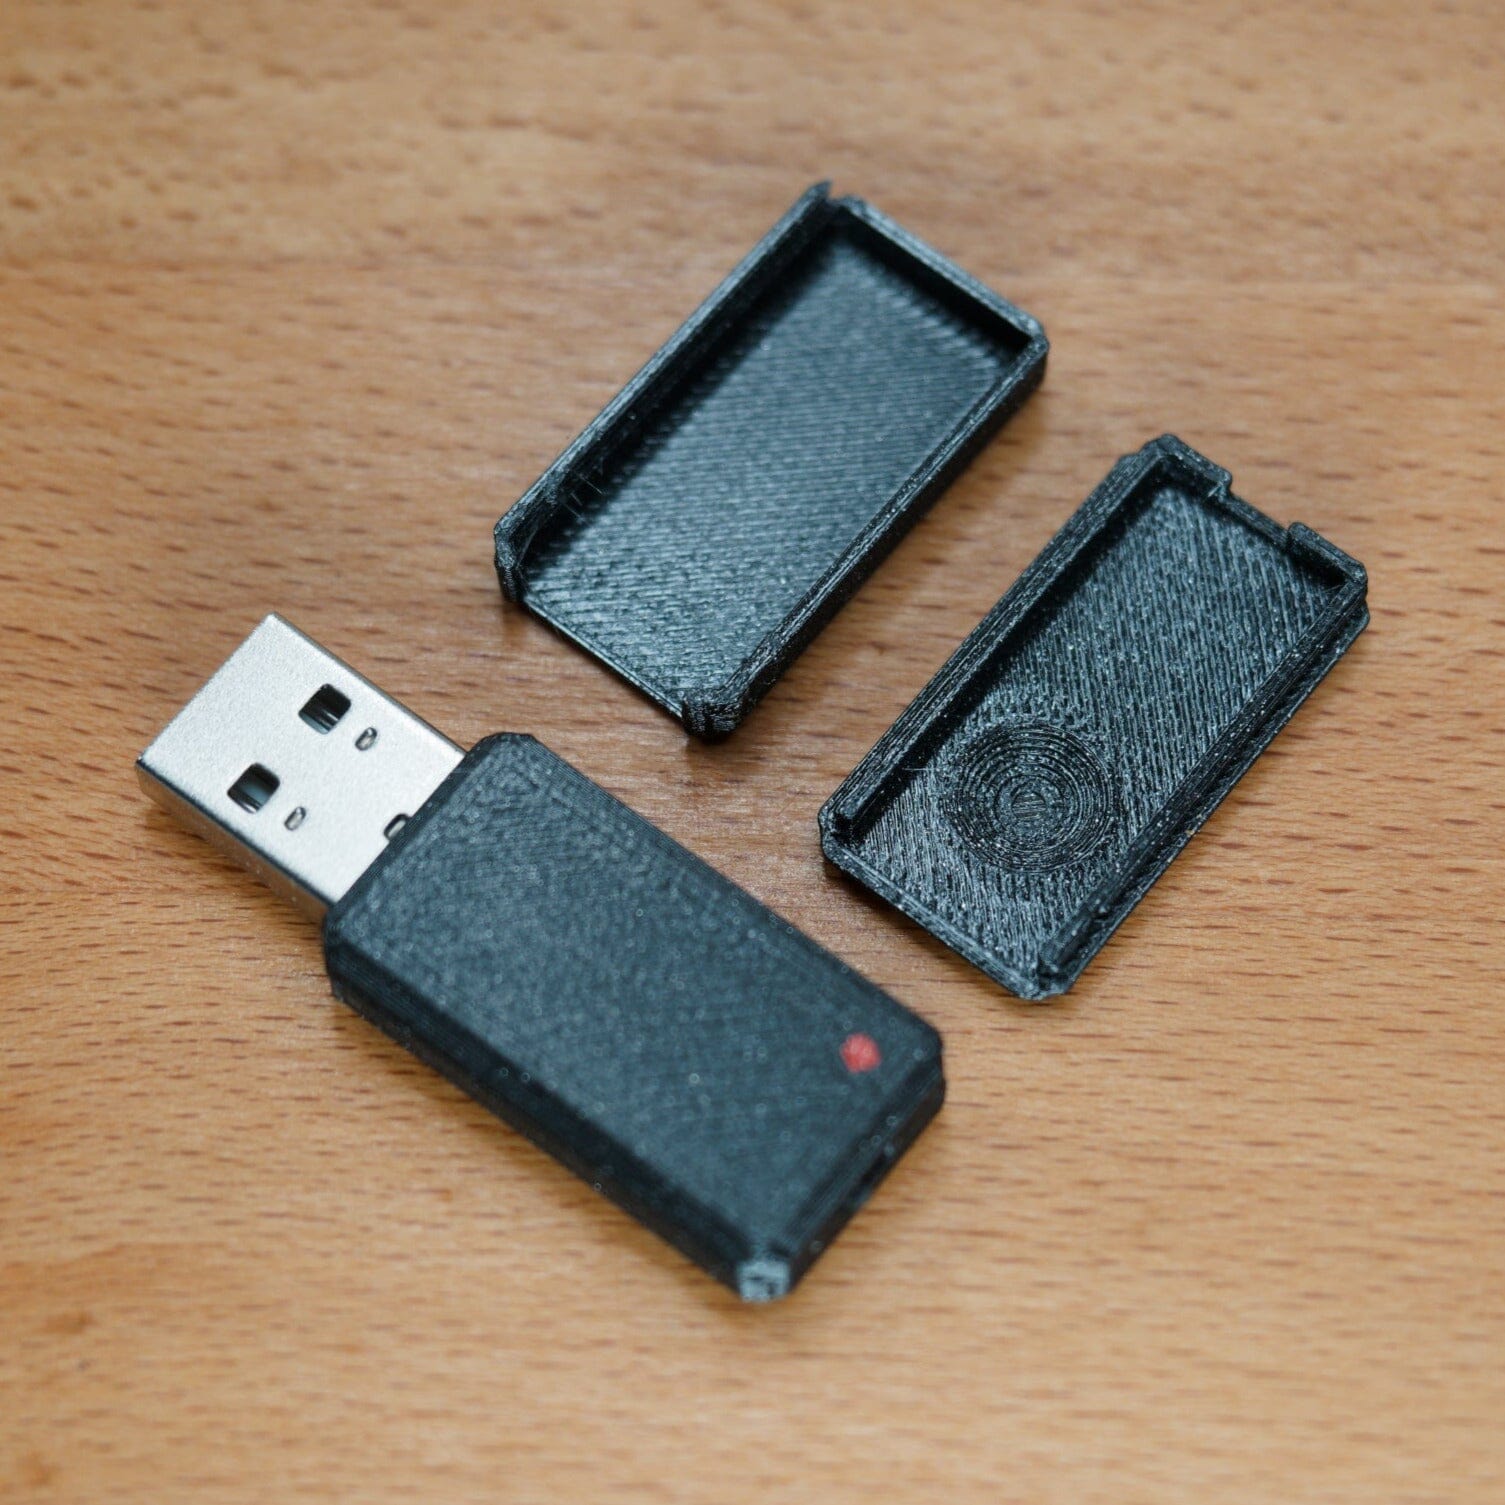 USB Nova with black Case